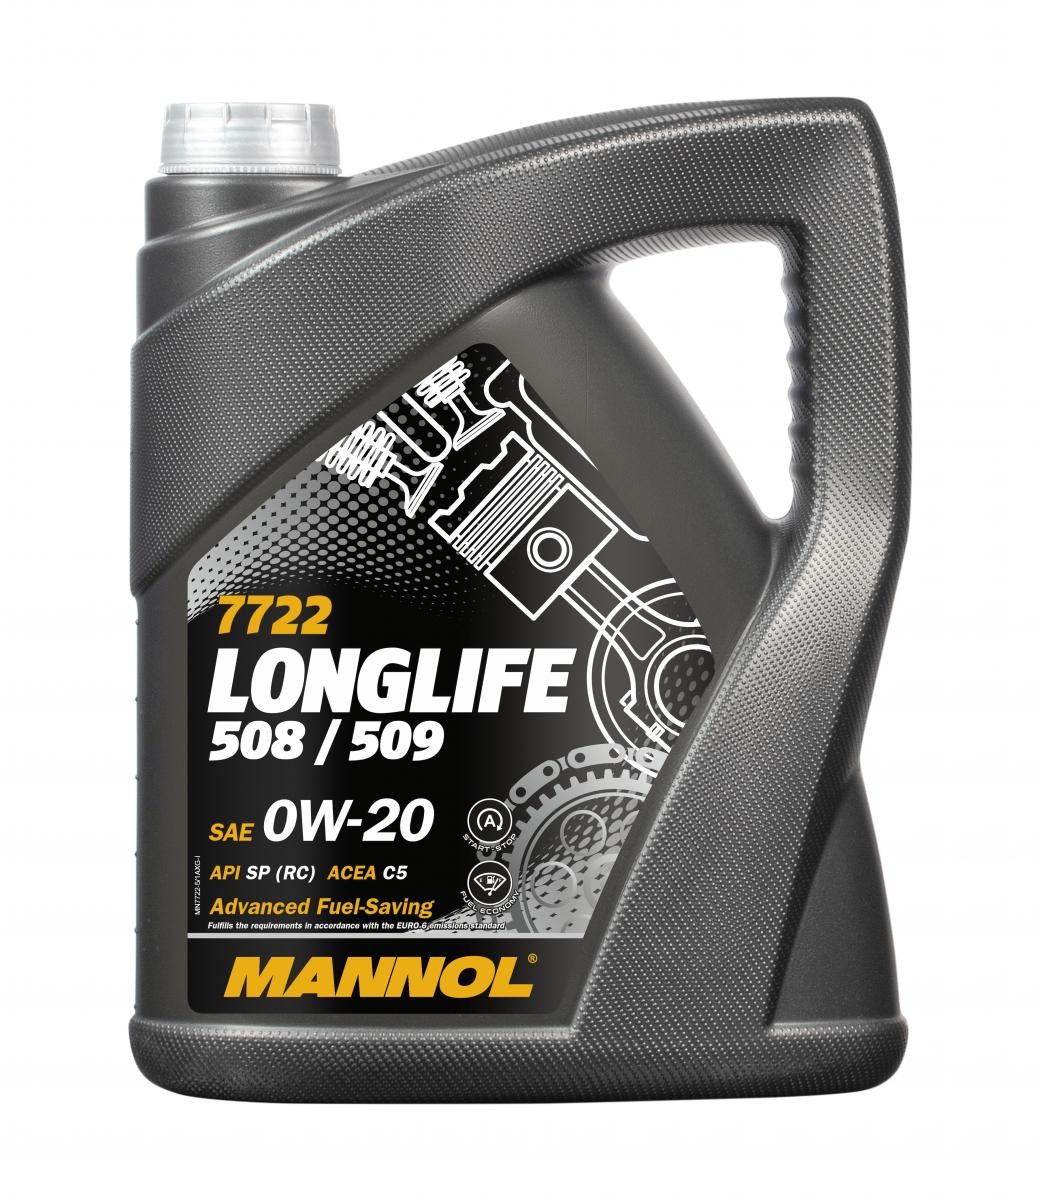 Aceite para motor 0W 20 longlife gasolina - MN7722-5 MANNOL Longlife 508/509